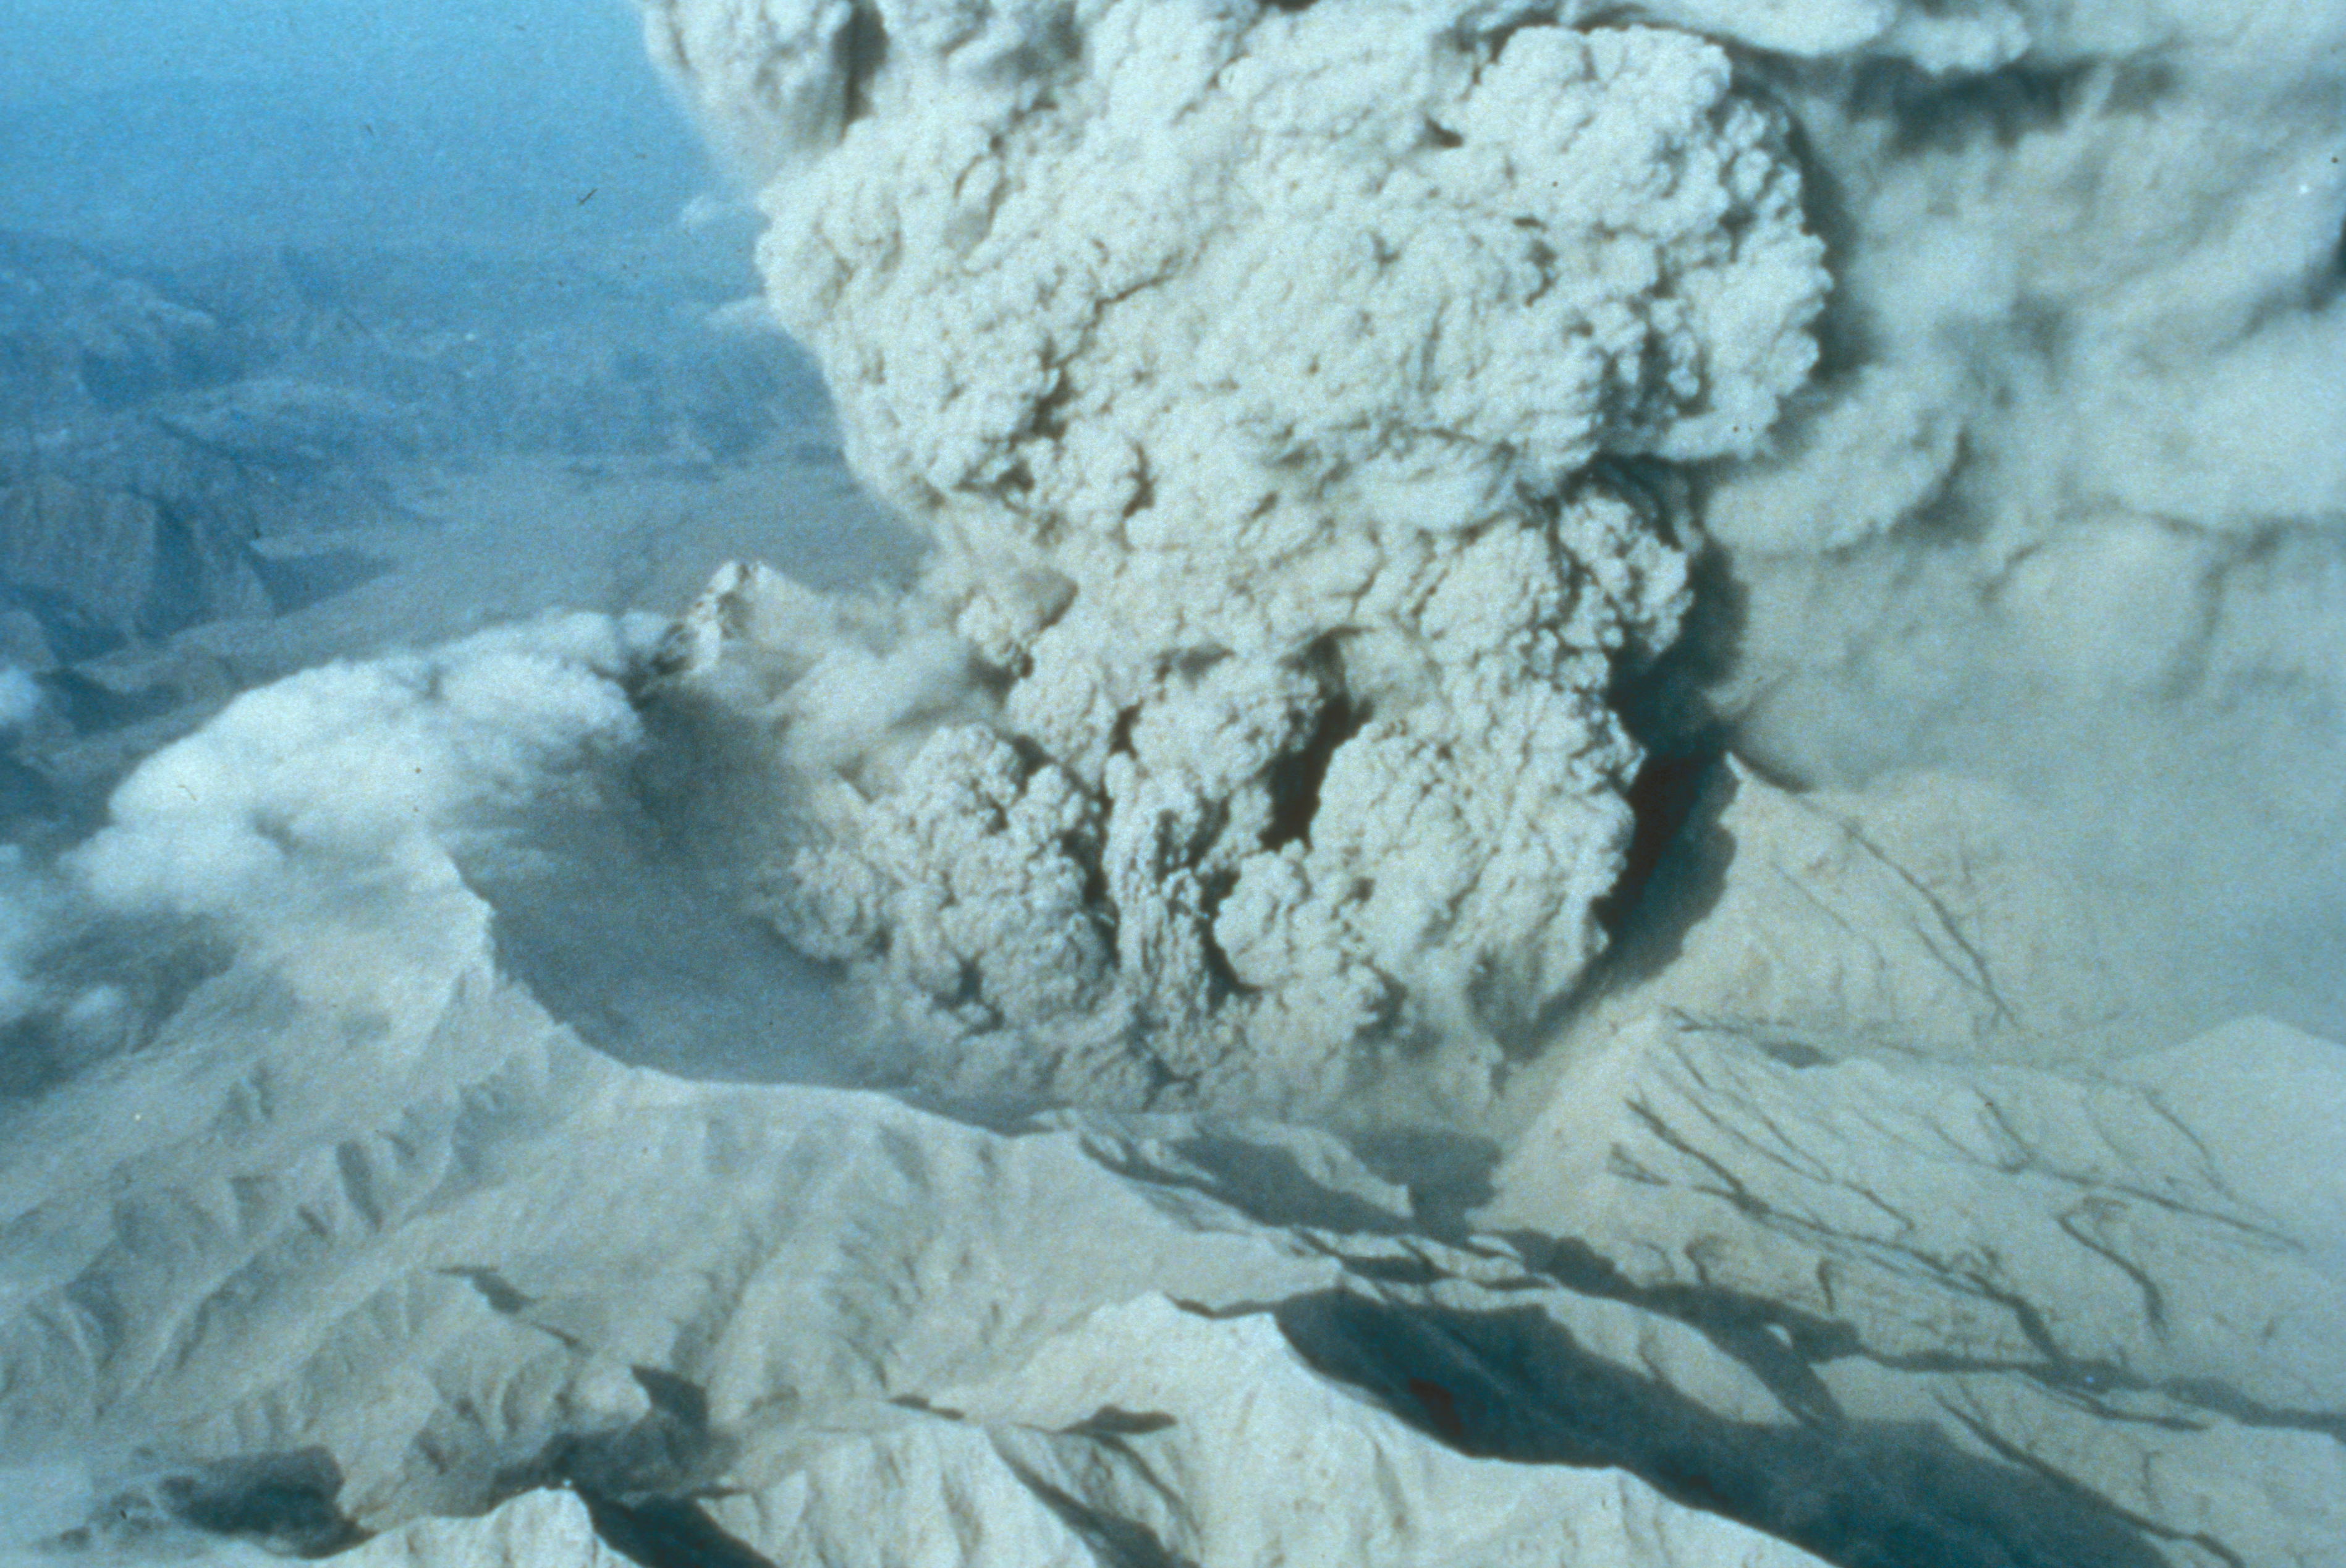 16 Powerful Photos And Videos Of Mt Pinatubos Destructive Volcanic Eruption 2196